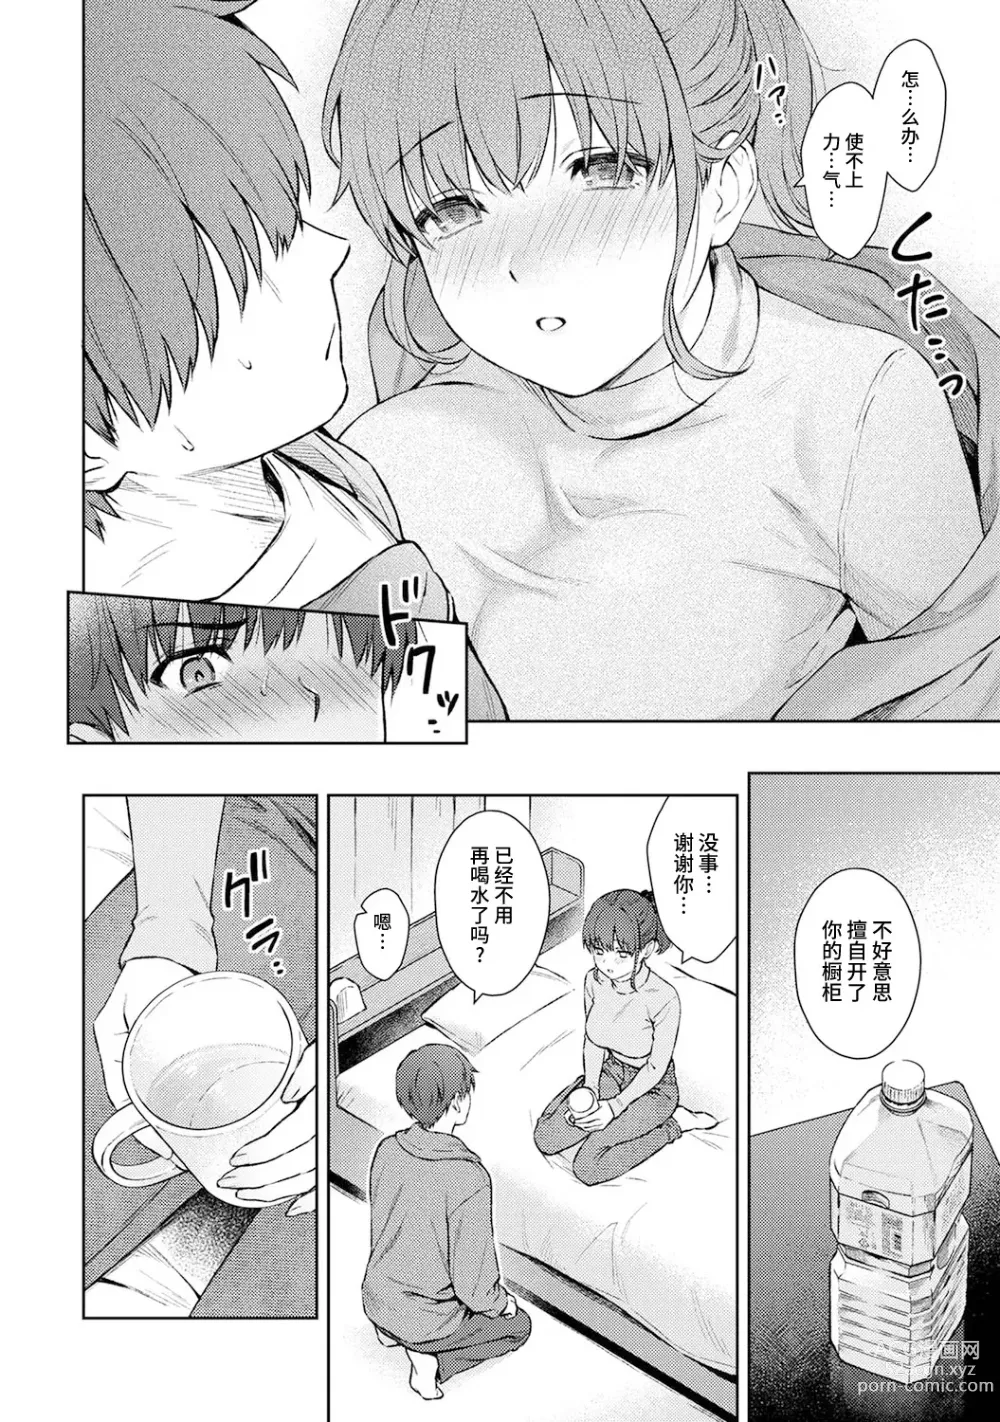 Page 7 of manga Sensei to Boku Ch. 13